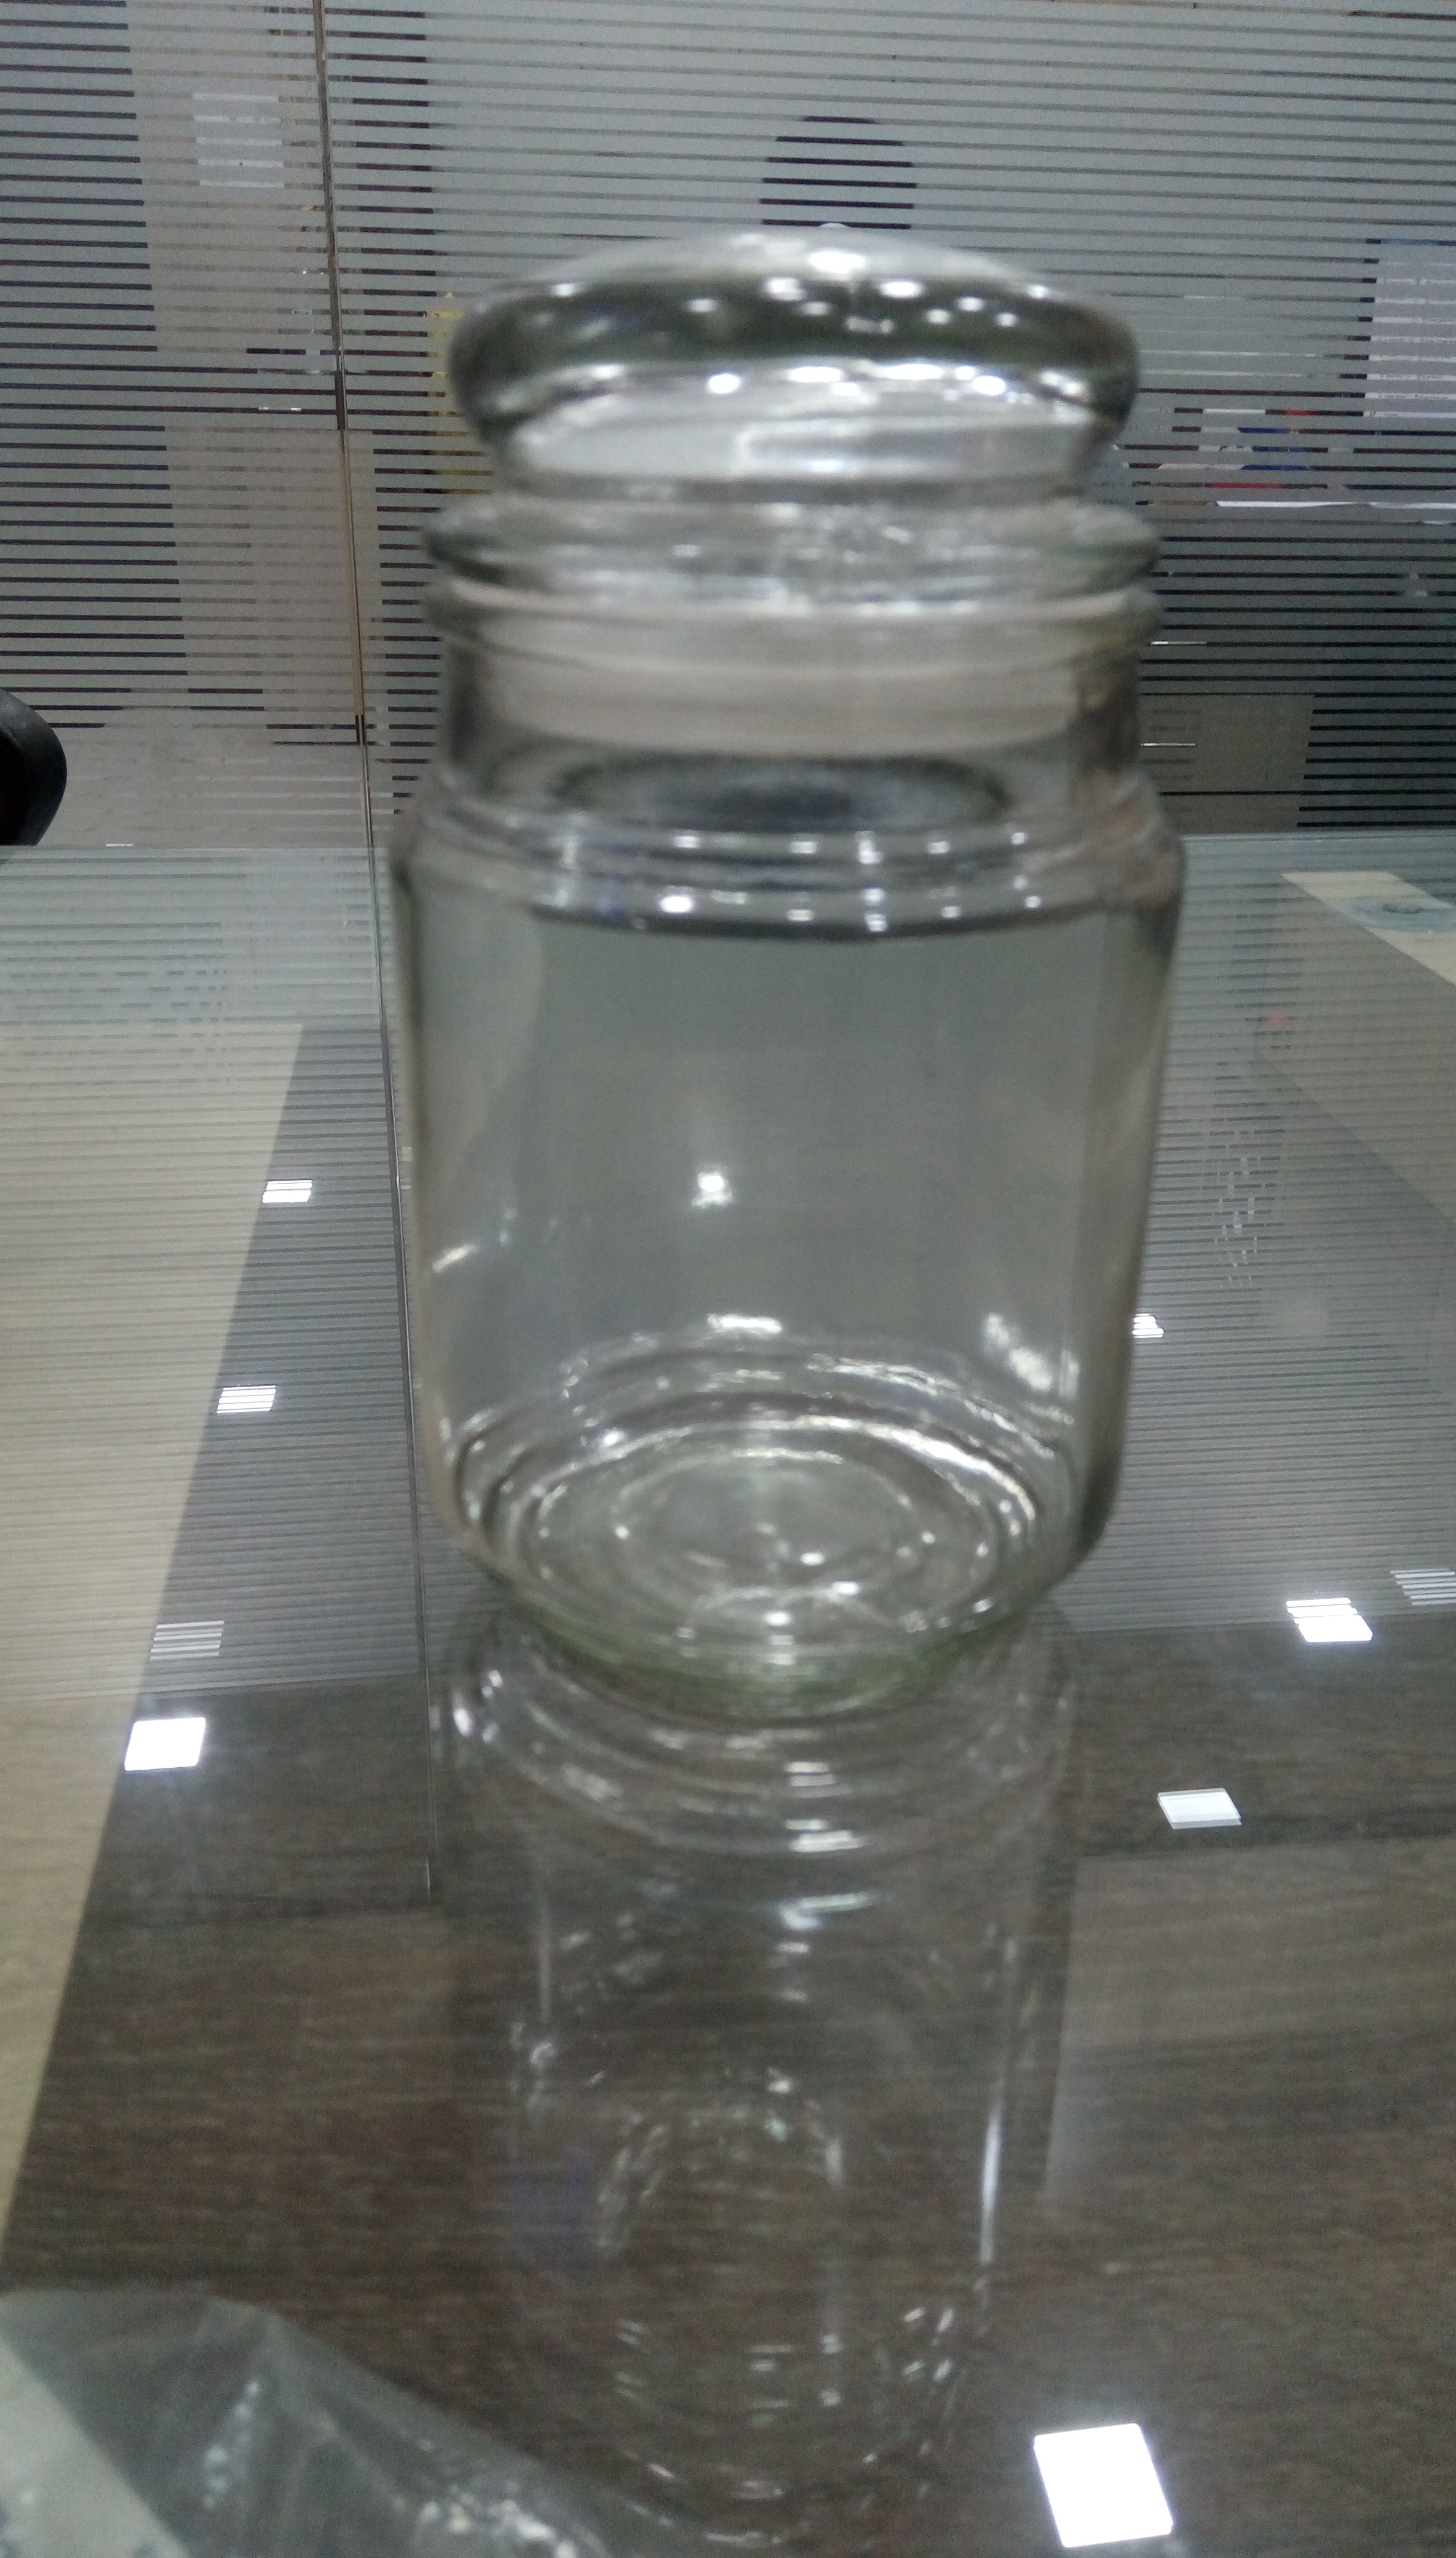 Pickle Glass Jars